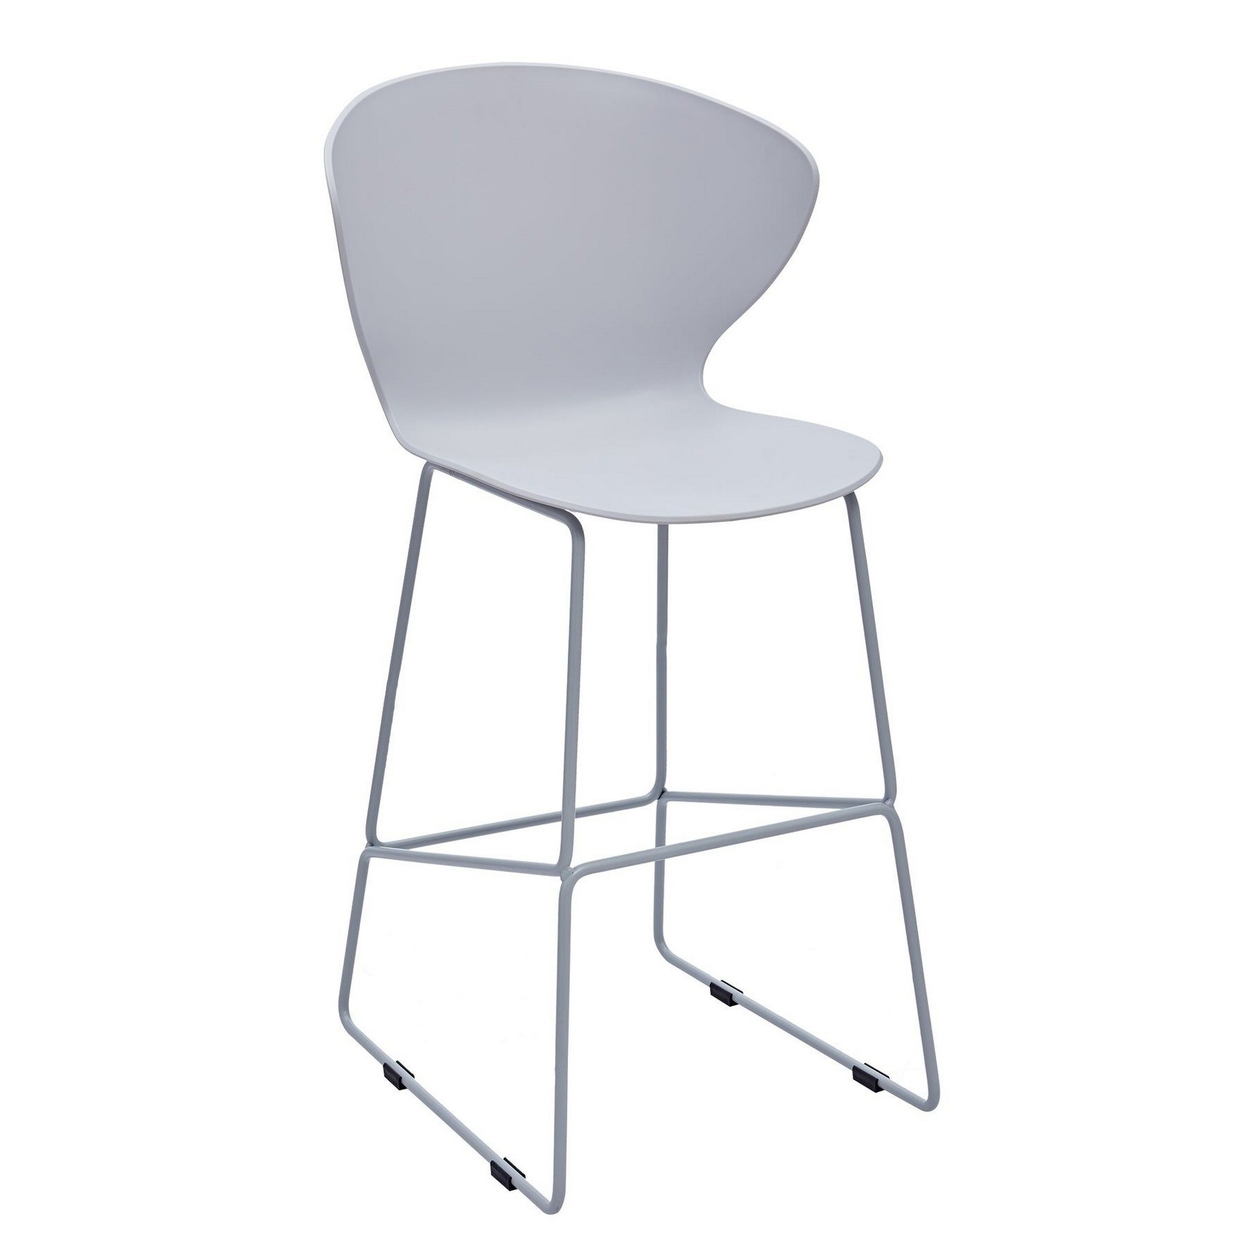 Kivi 26 Inch Set Of 2 Counter Stool Chairs, Metal Legs, Gray Polypropylene - Saltoro Sherpi